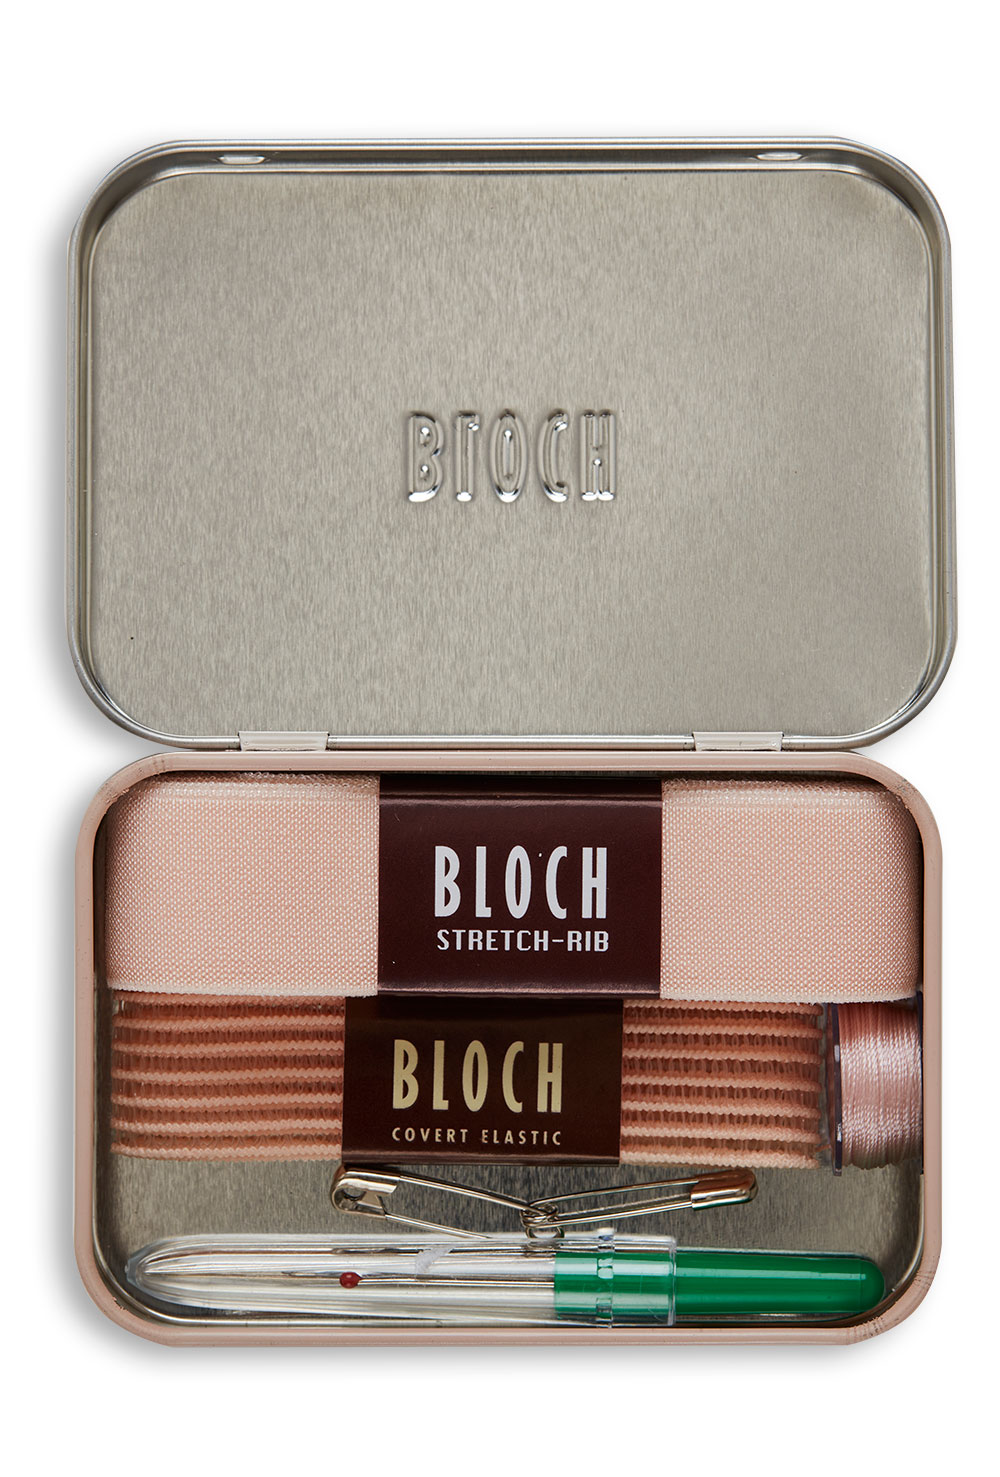 Bloch Stitch Kit